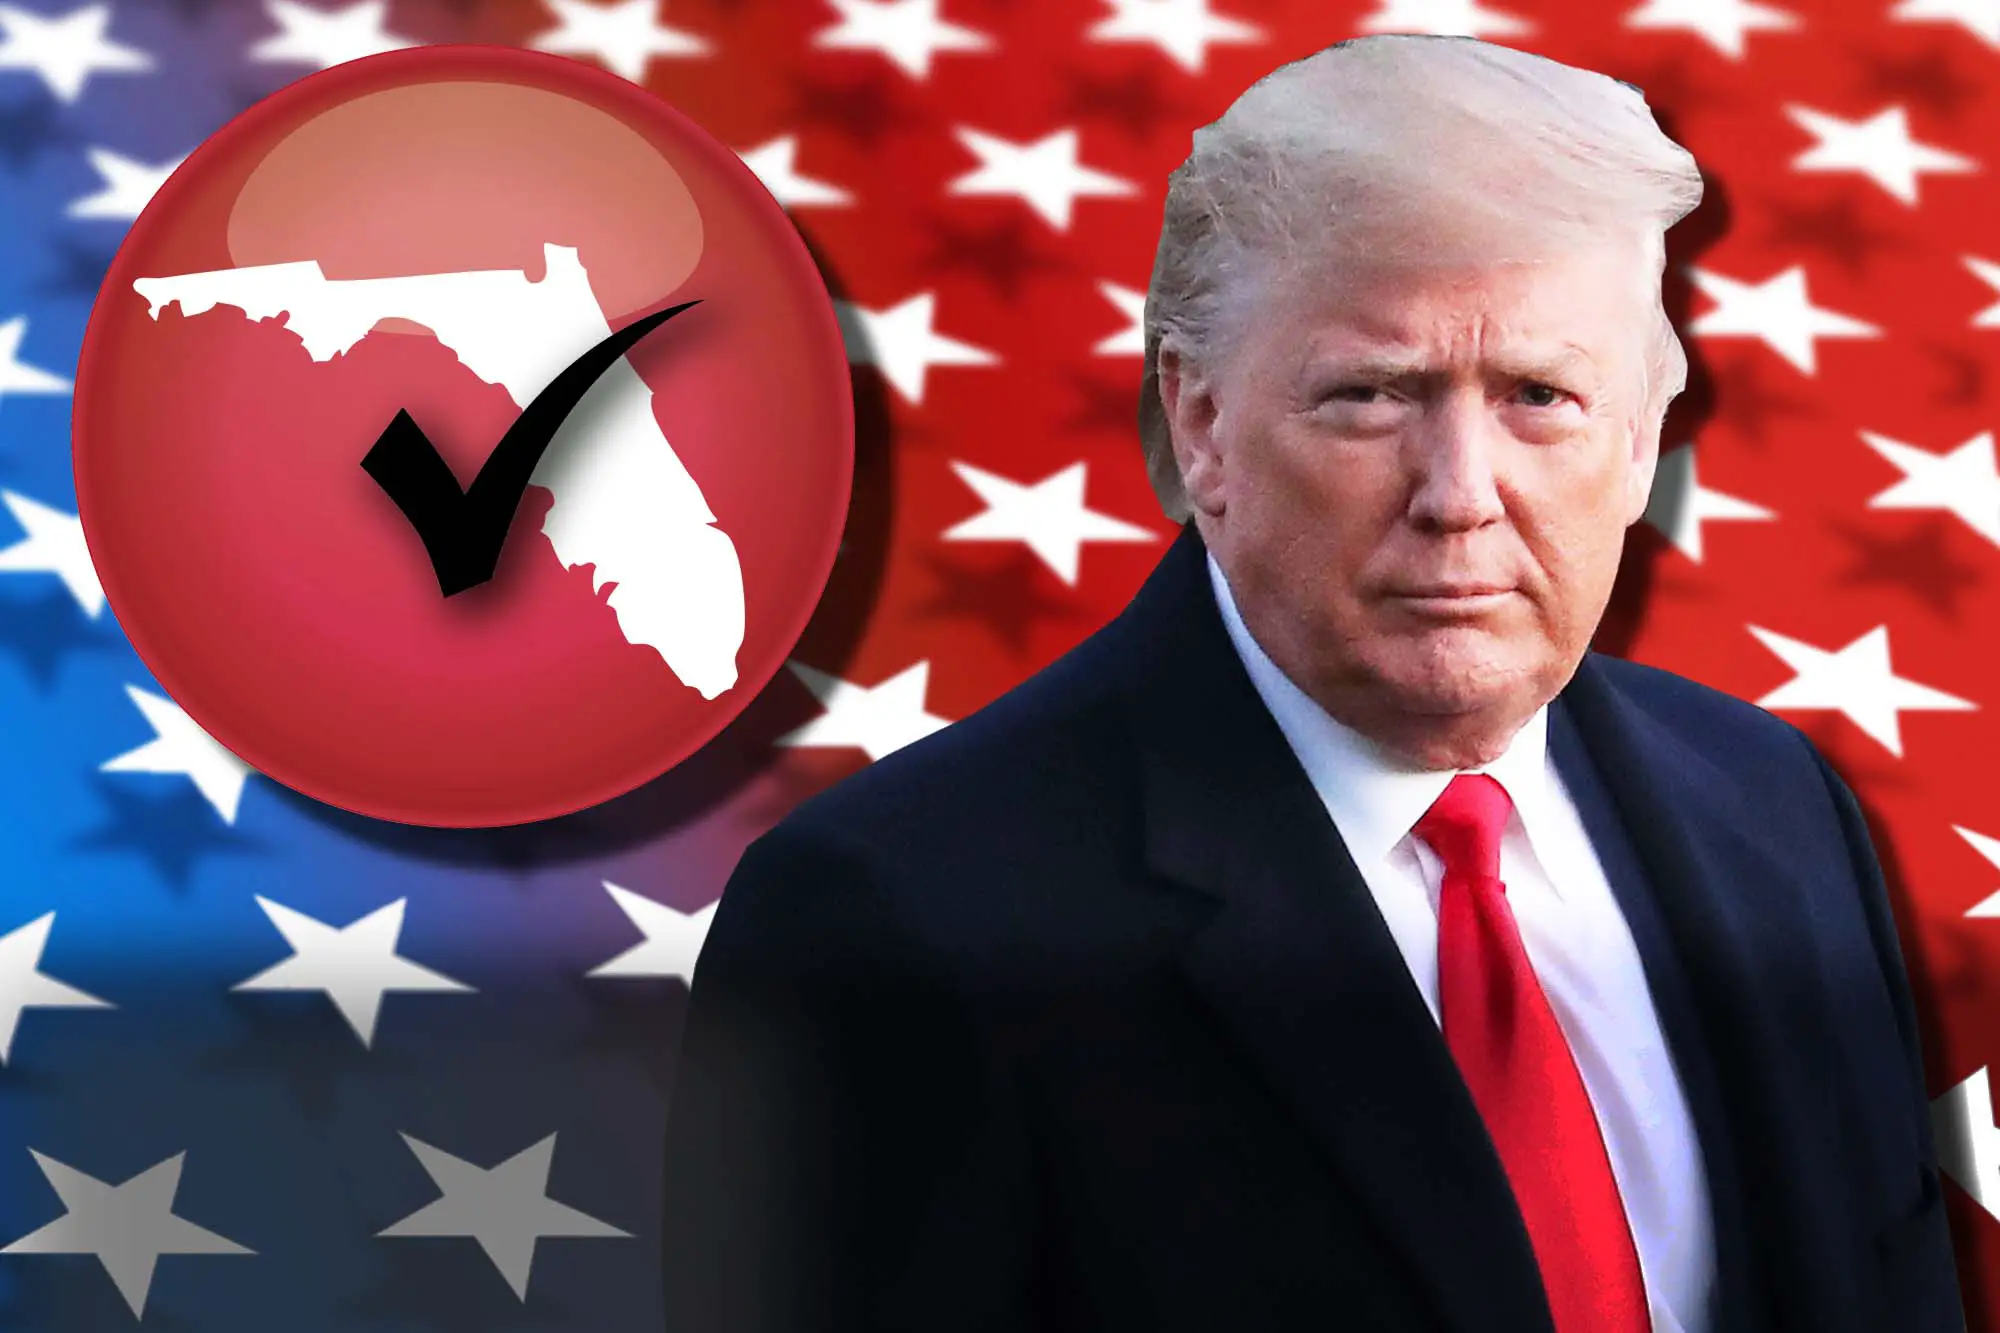 2020 election: Trump wins in Florida